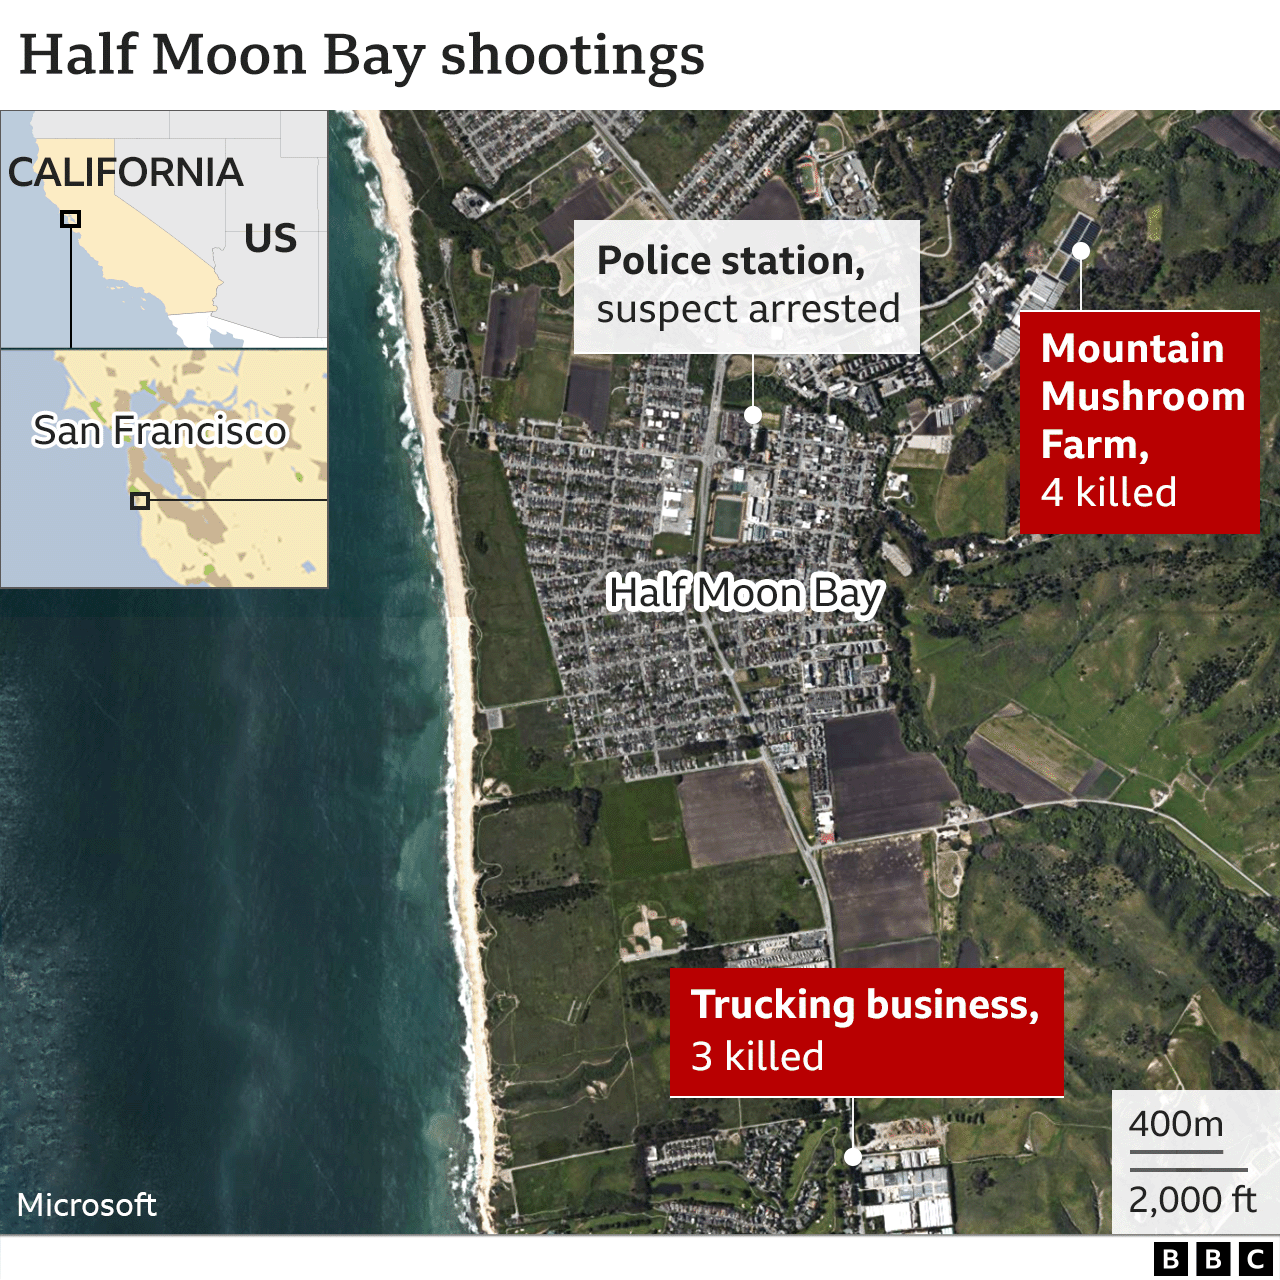 Half Moon Bay shooting locations